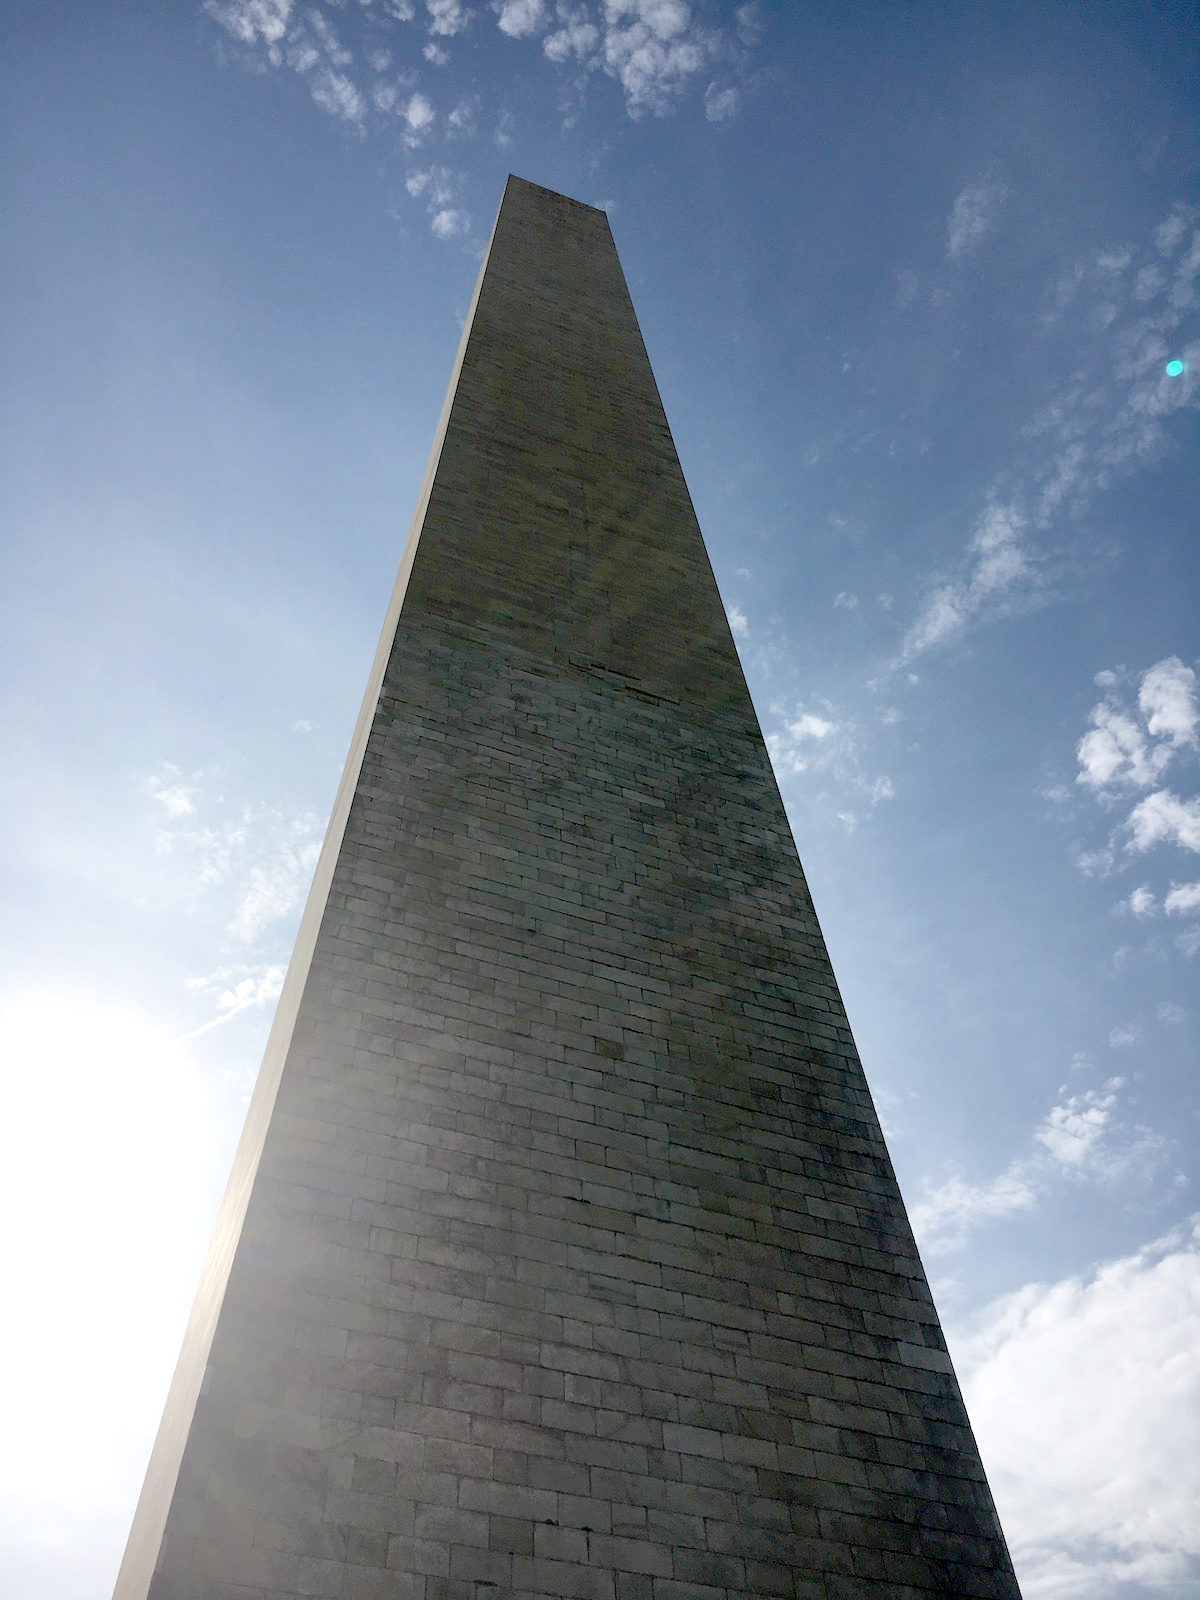 The Washington Monument during the 2017 Climb the Hill event. [Photo] Derek Franz